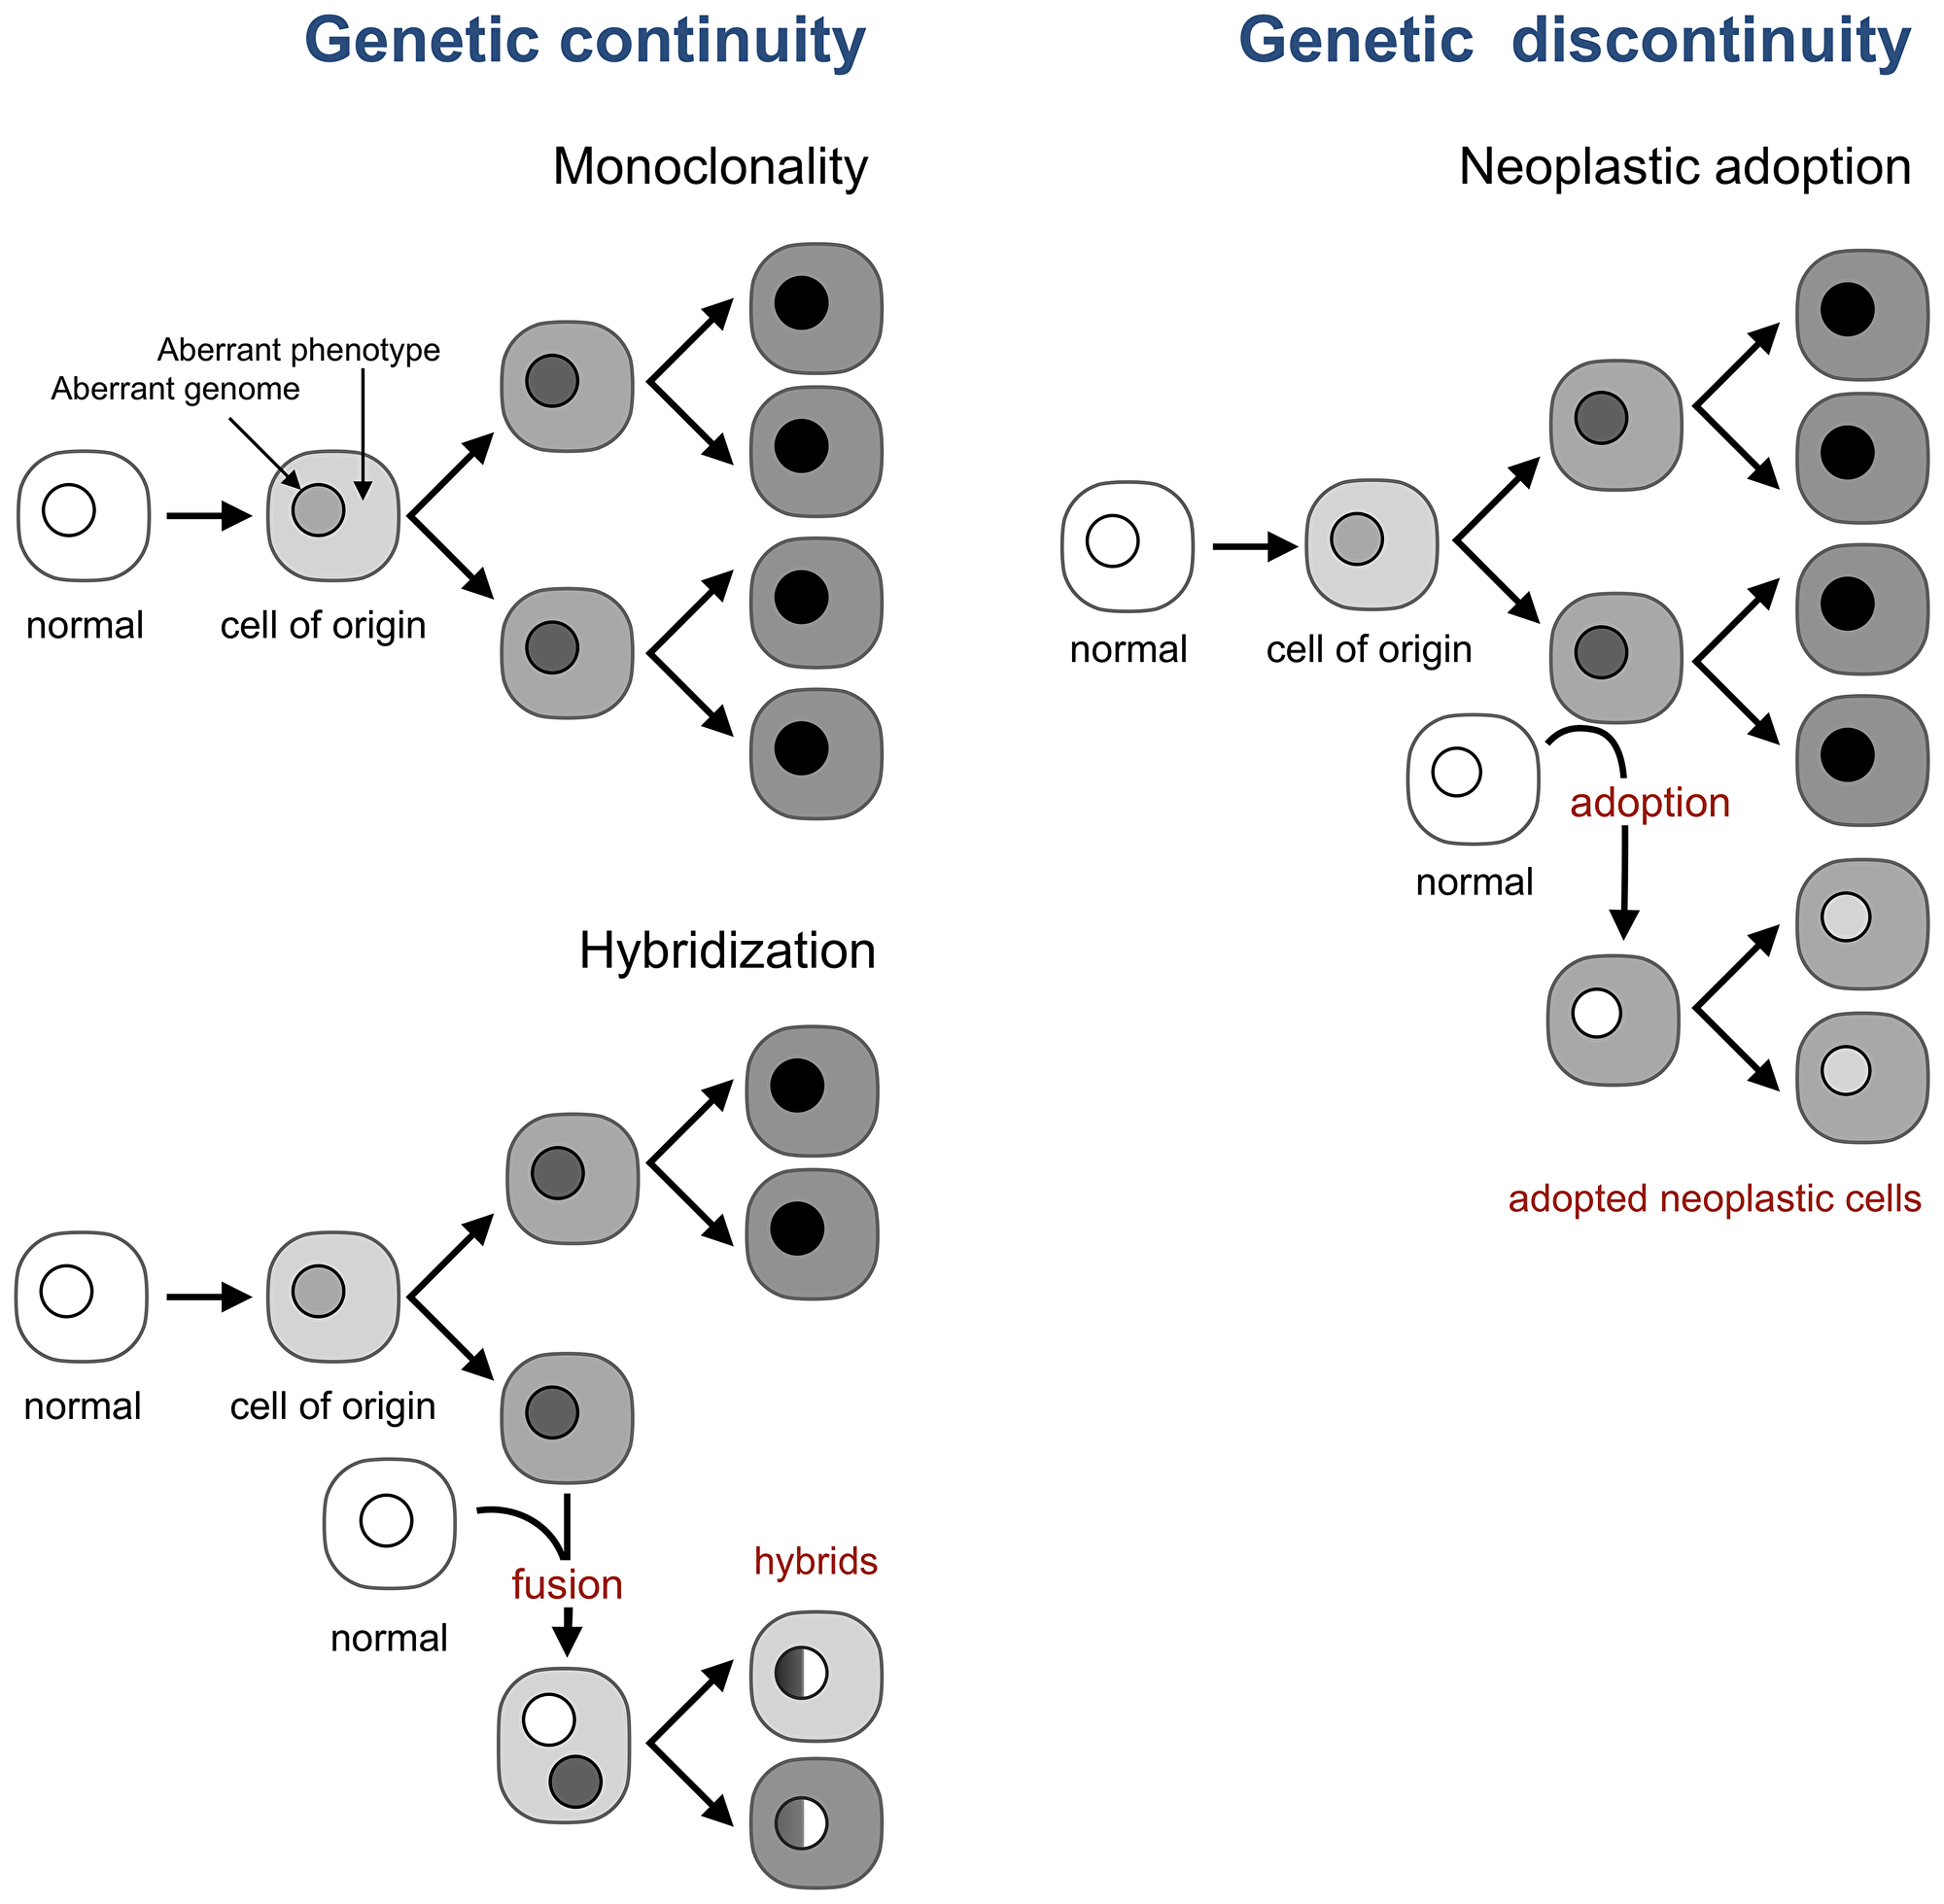 Neoplastic adoption enables genetic discontinuity in tumor development.